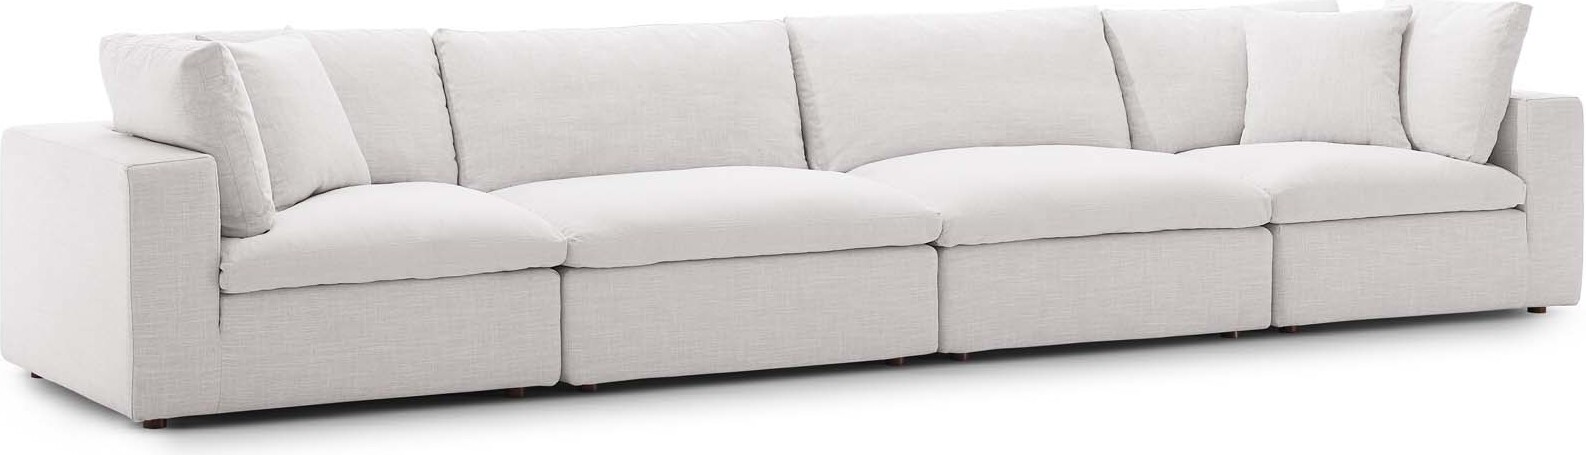 Commix Beige Down Filled Overstuffed 4 Piece Sectional Sofa Set